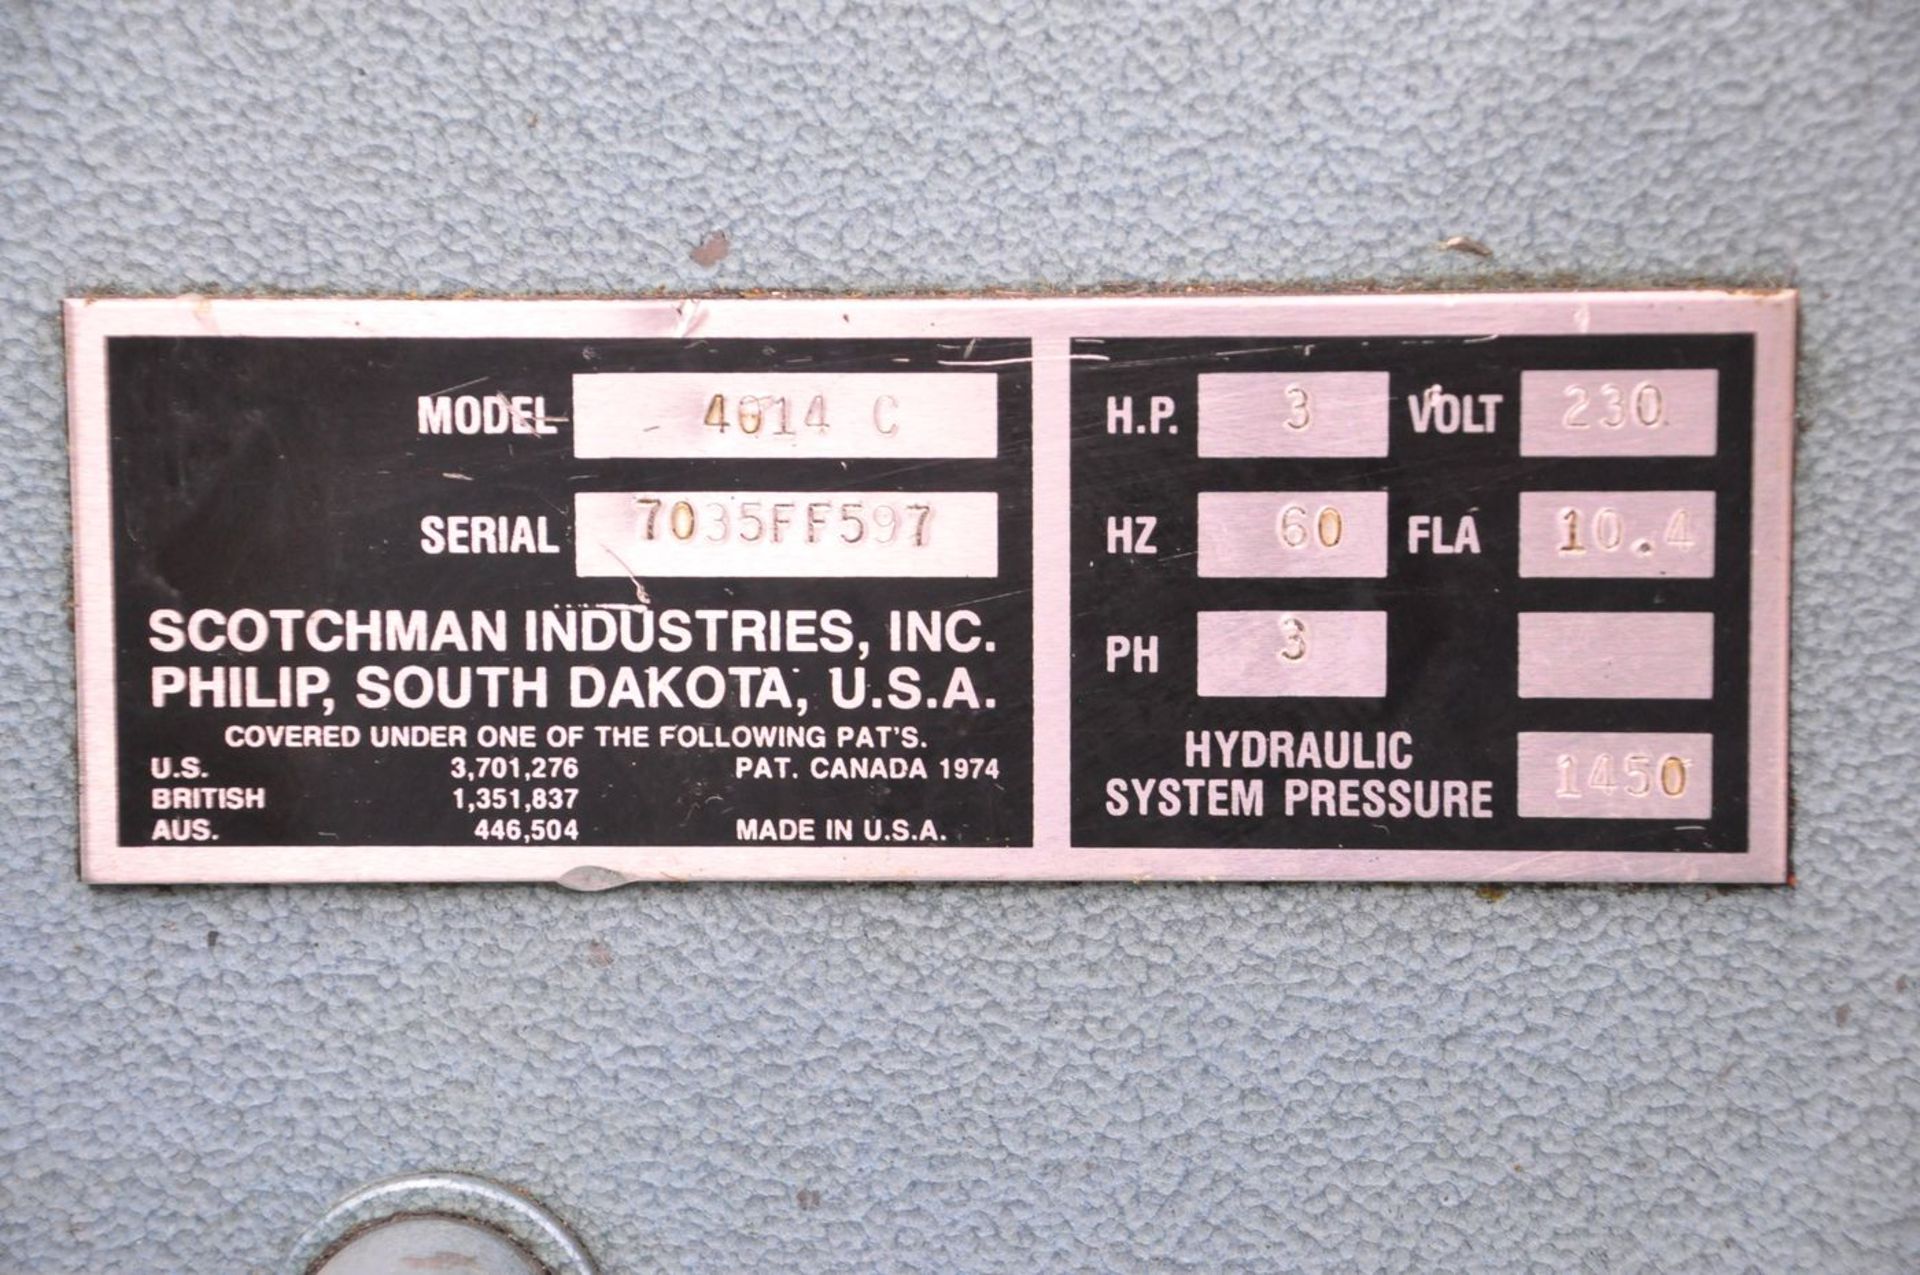 Scotchman 40-Ton Cap. Model 4014C Ironworker, S/N: 7035FF597 (2000); 3-HP, 230-V, 3-PH, Portable - Image 6 of 6